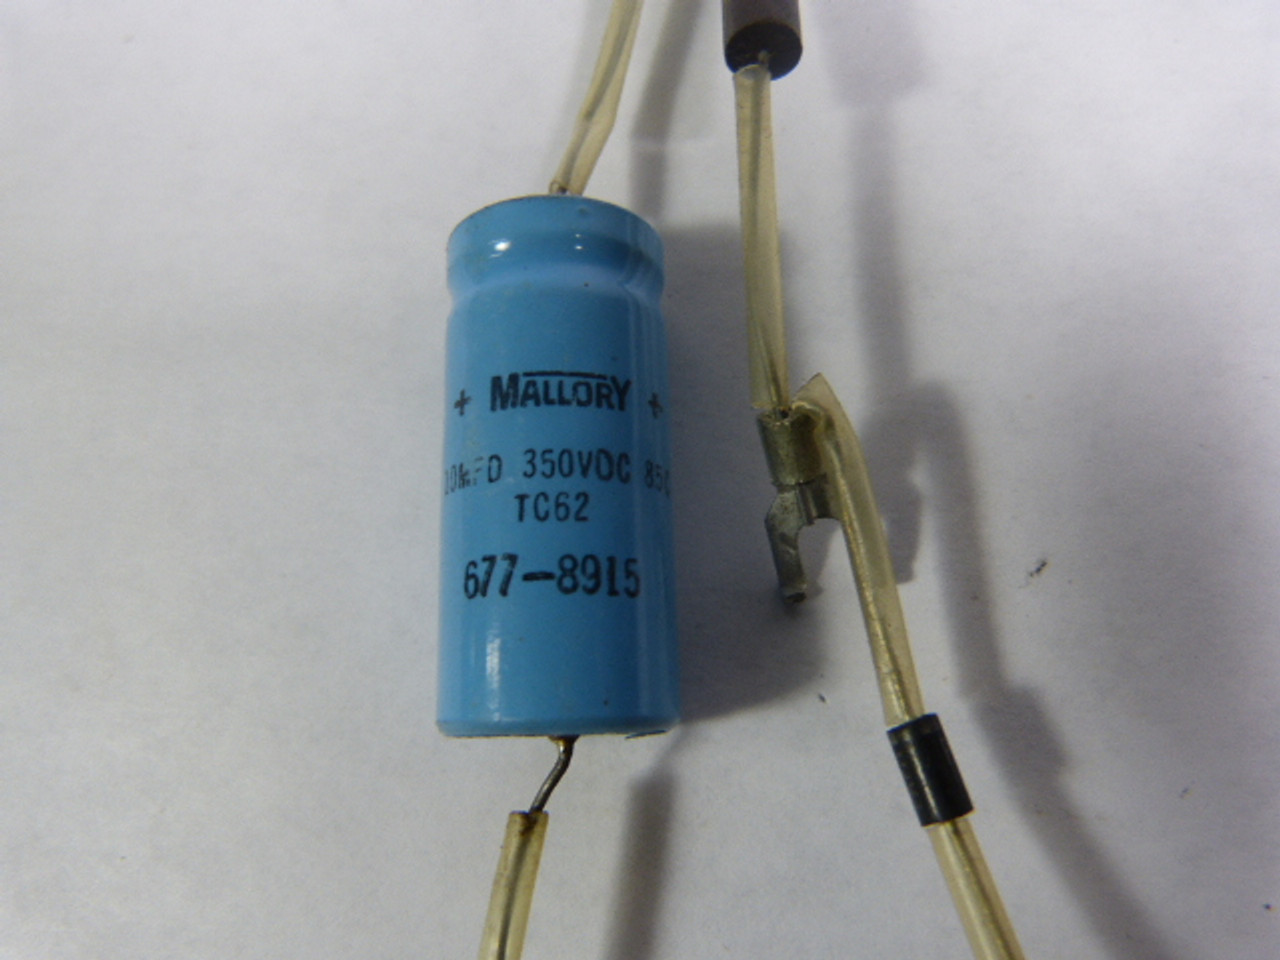 Mallory TC62/677-8915 Capacitor 10mfd 350VDC USED